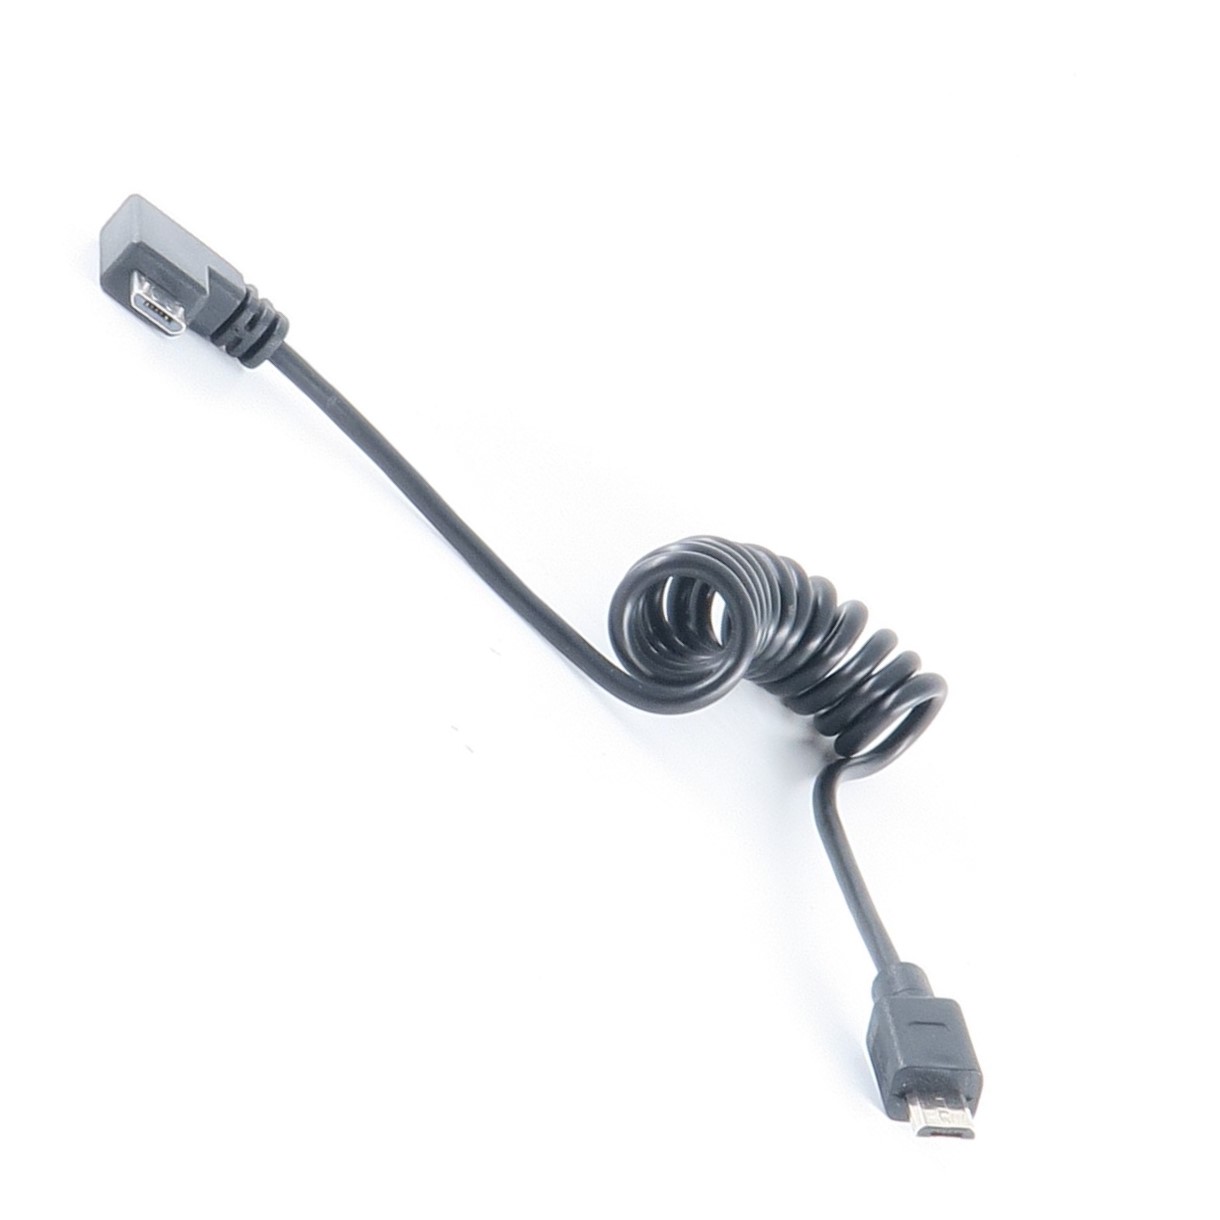 ConnecThor cable - micro USB to micro USB for DJI Spark/Mavic Mini